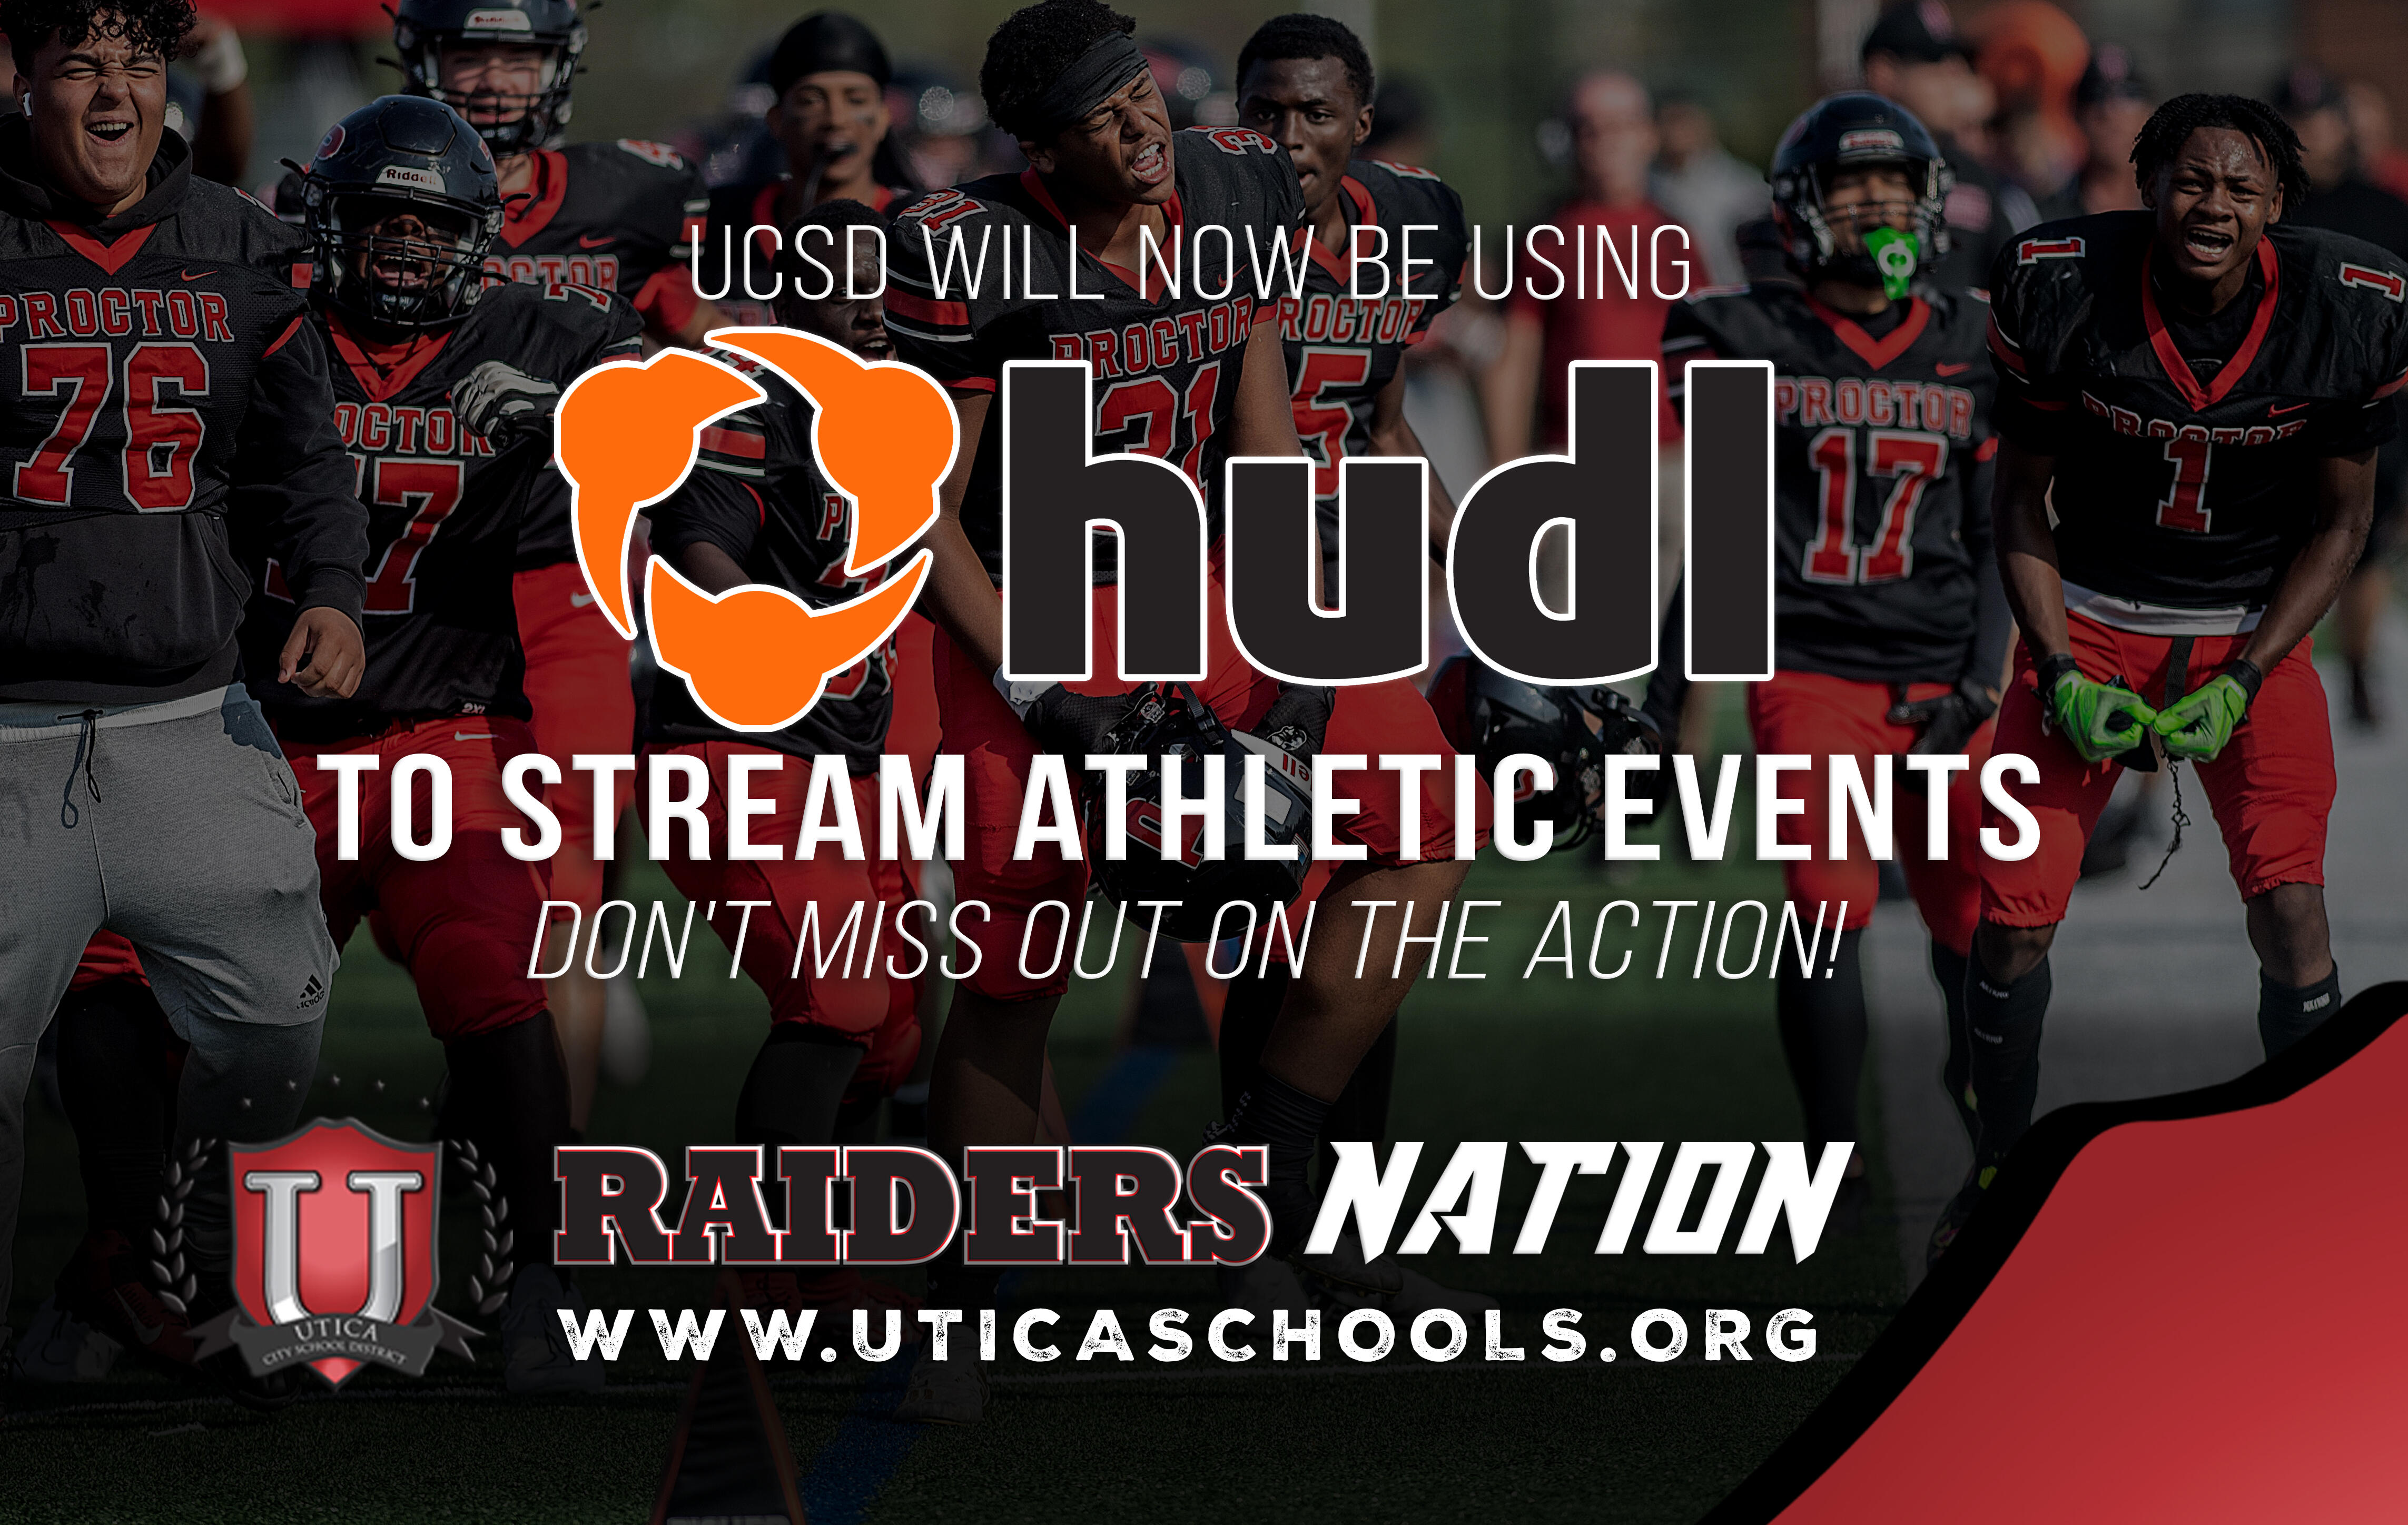 UCSD kini akan menggunakan HUDL TV untuk menstrim acara sukan. Jangan terlepas aksi!